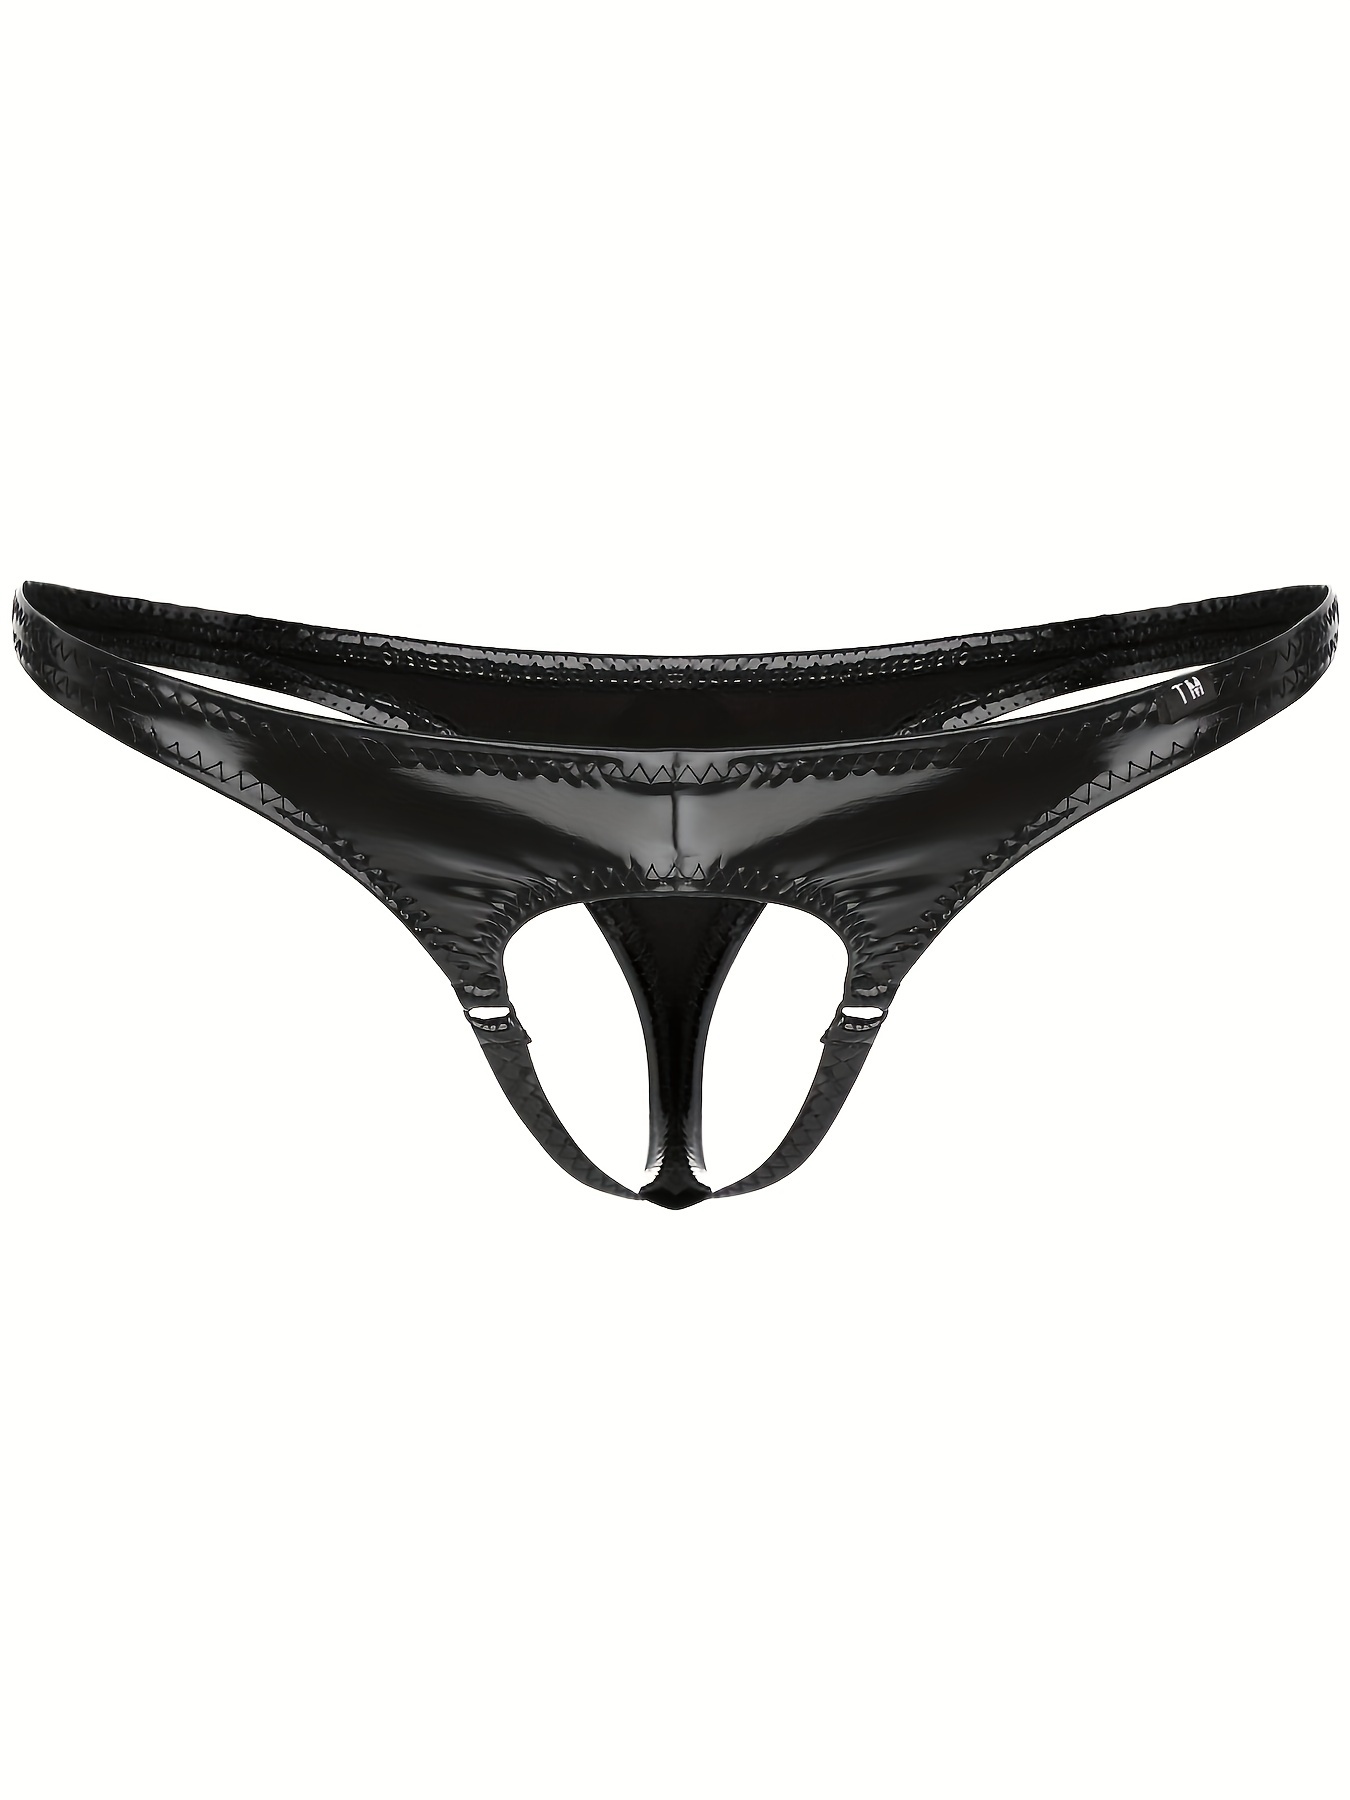 BDSM Man Sexy Crotchless Panties Not Zipper Gay Open Crotch